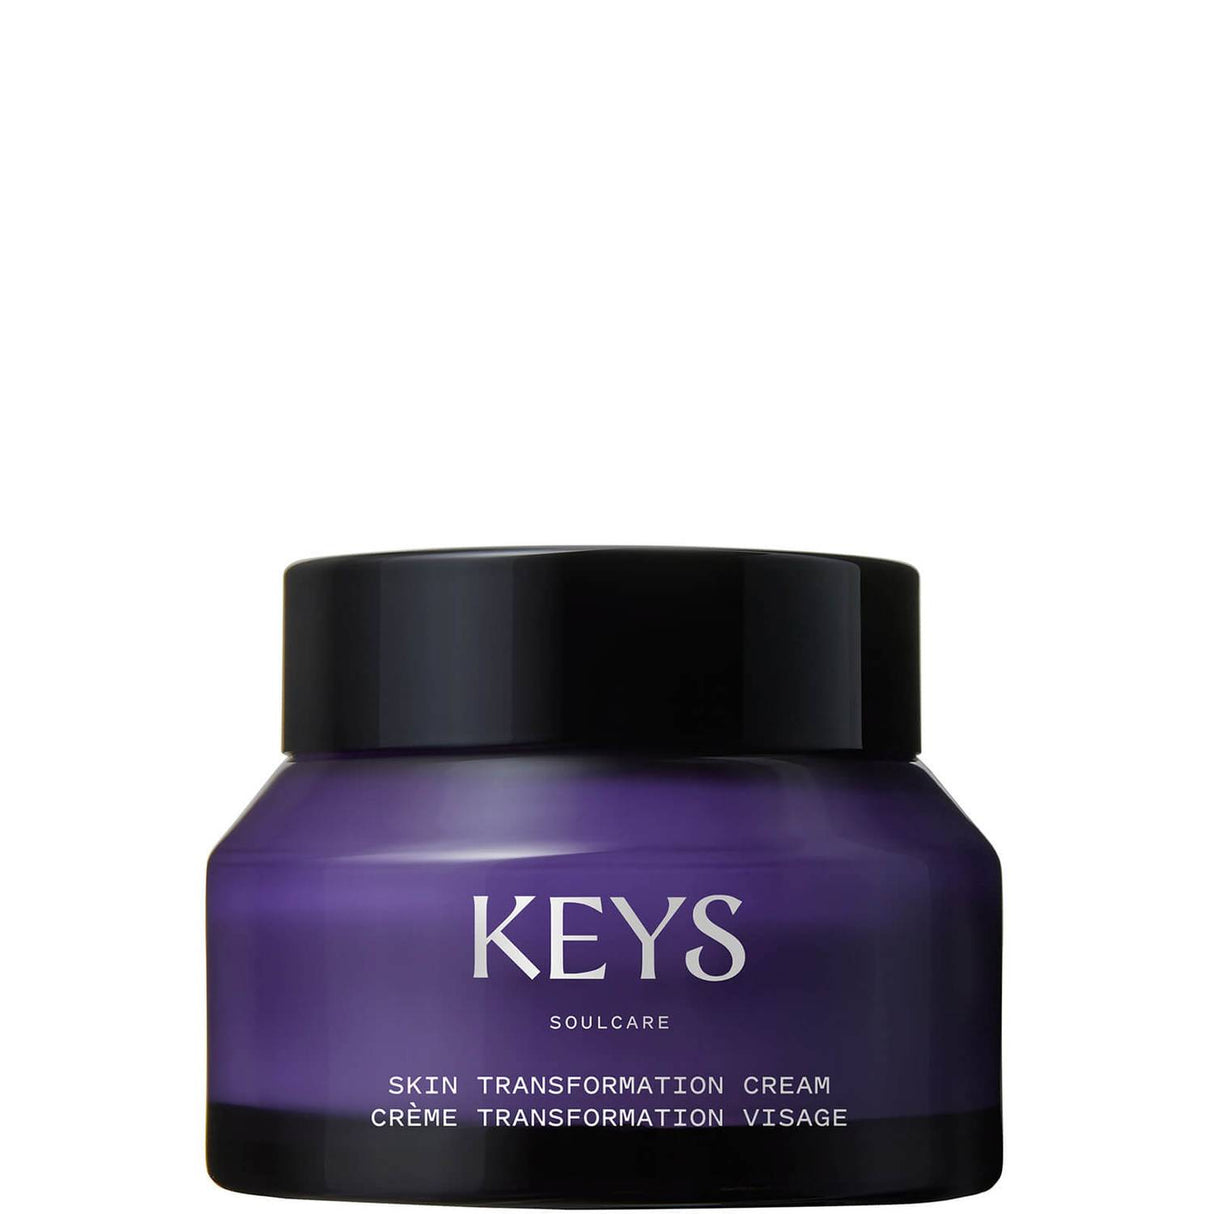 Keys Soulcare Rich Skin Transformation Cream (1.76 oz)